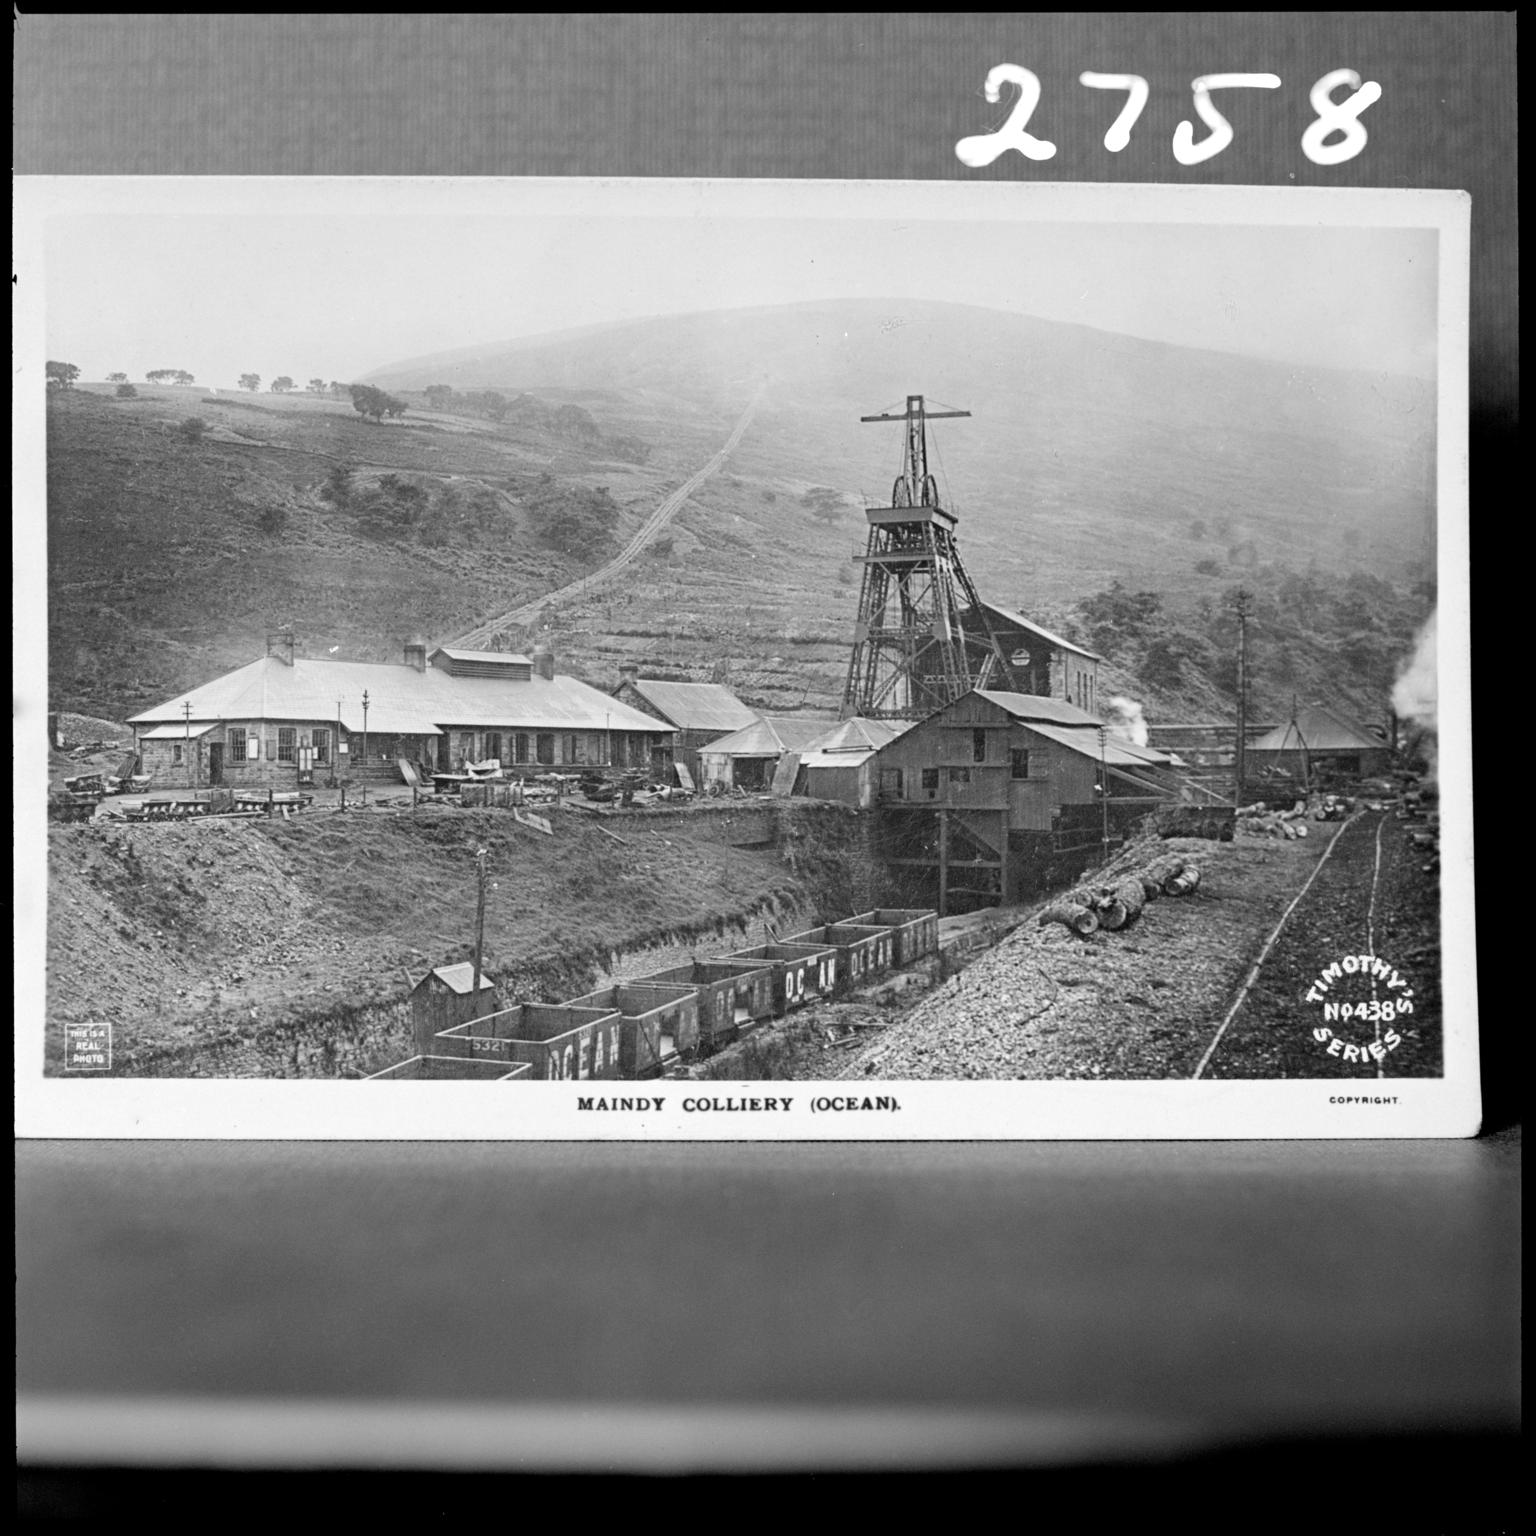 Maindy Colliery, film negative